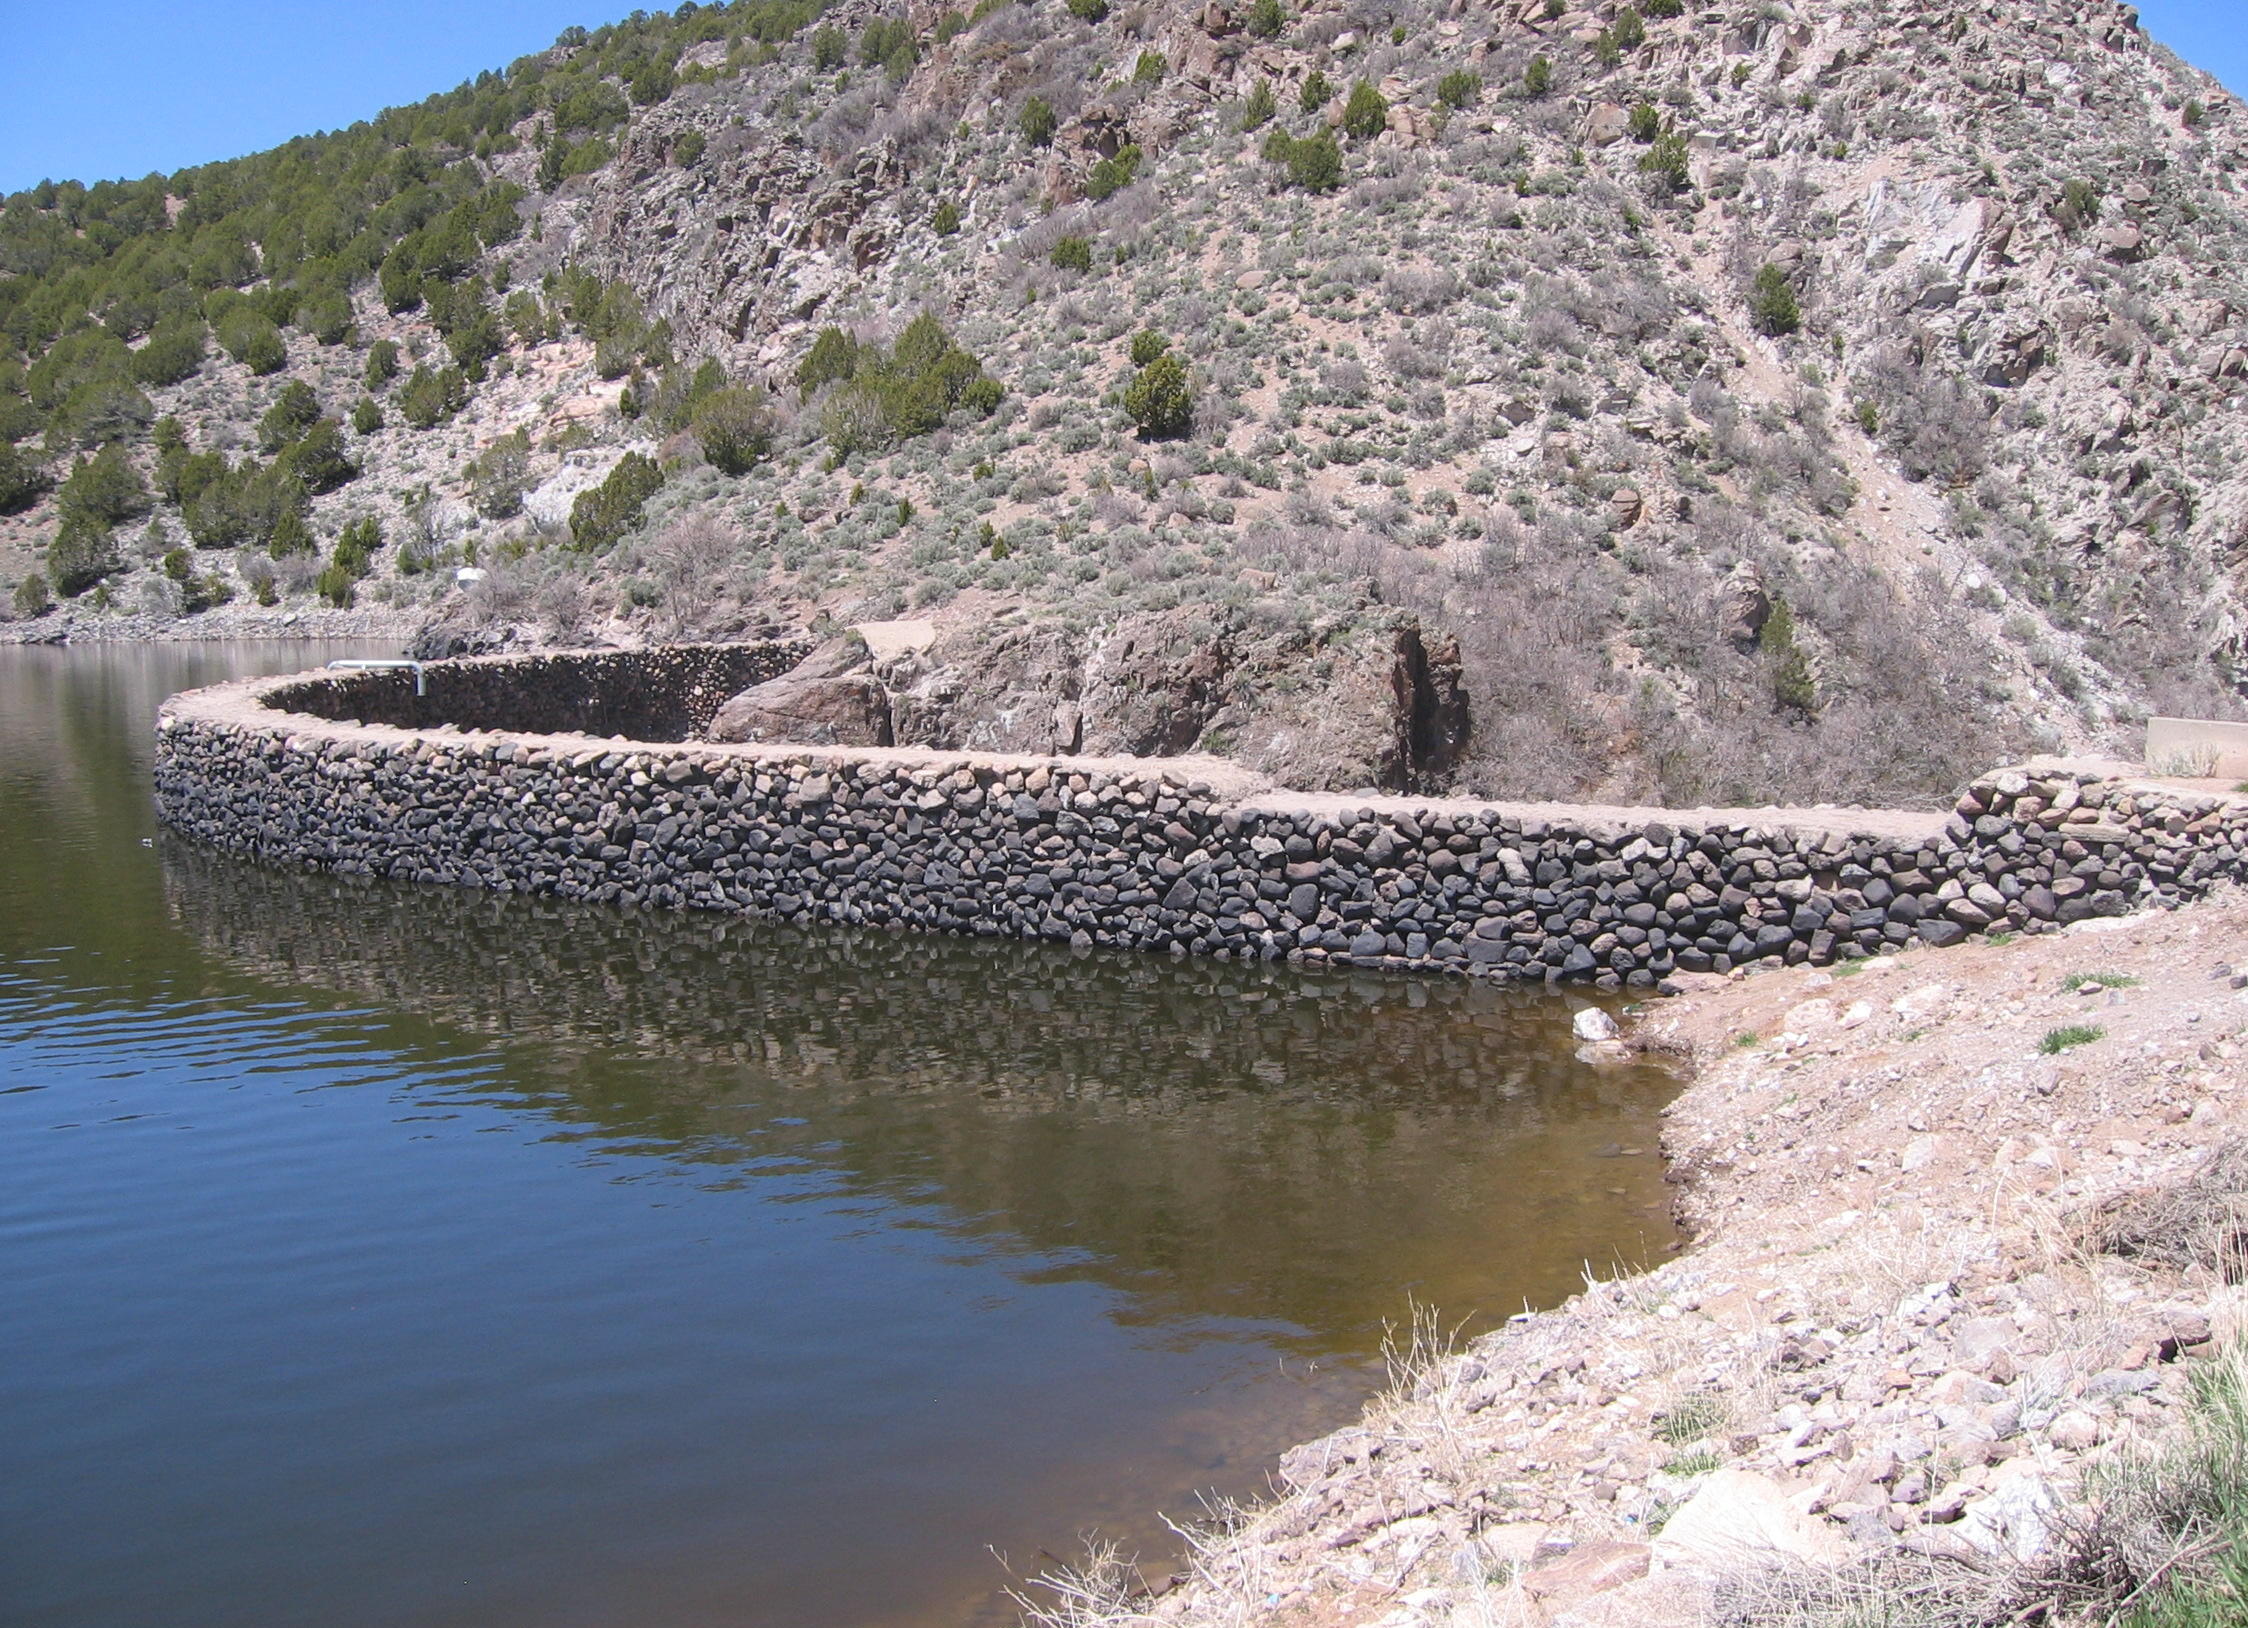 Upstream Side of the Enterprise Dam